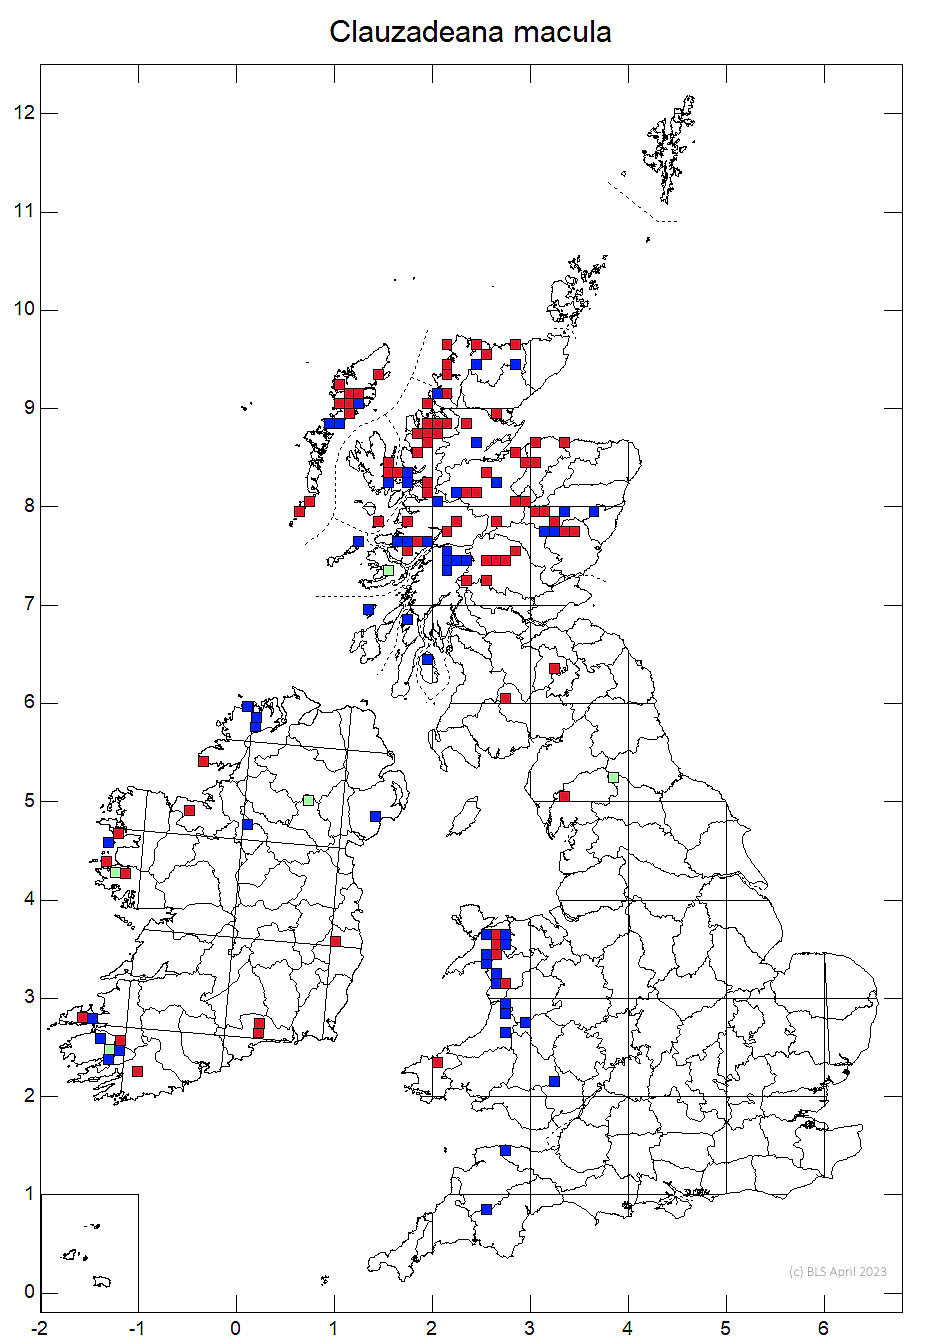 Clauzadeana macula 10km sq distribution map